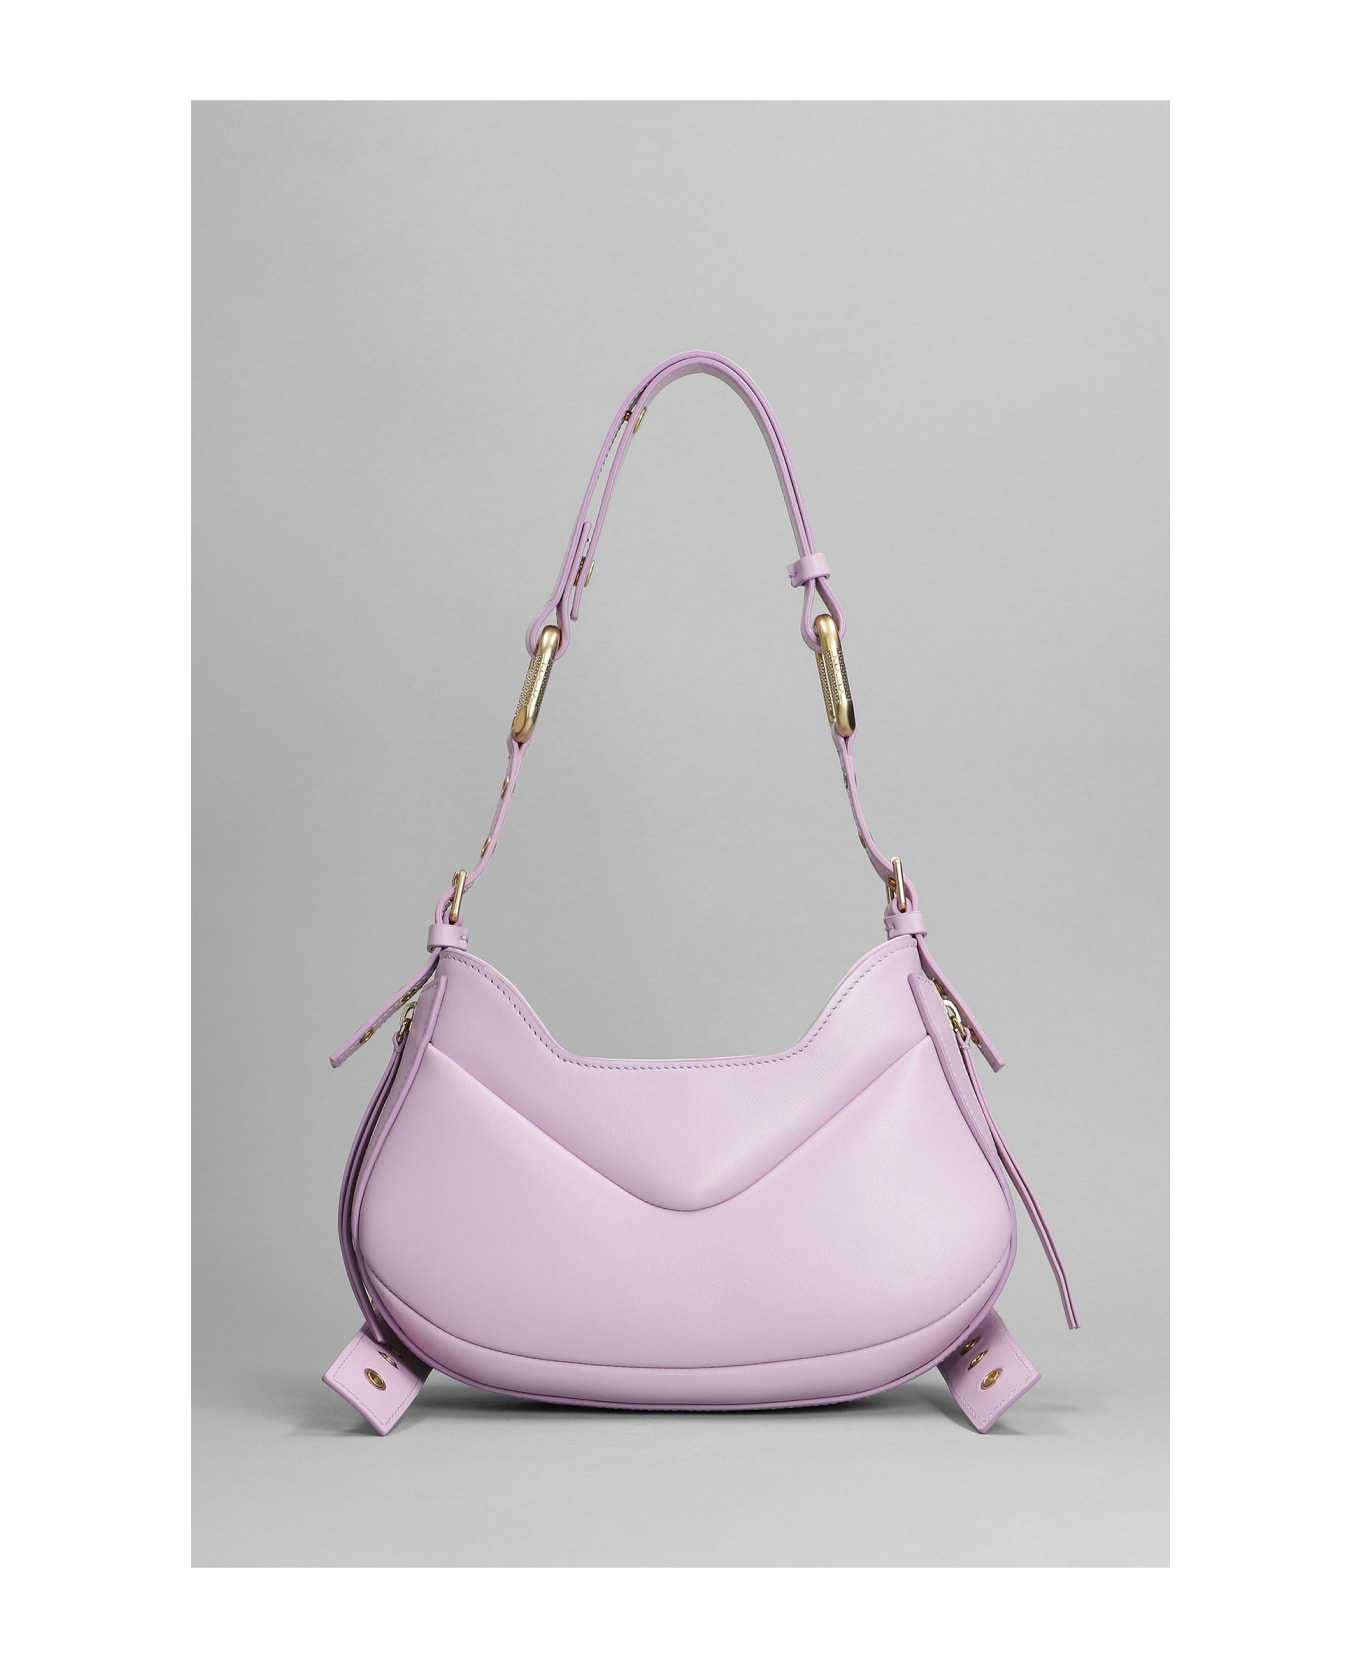 Biasia Shoulder Bag In Viola Leather - Viola